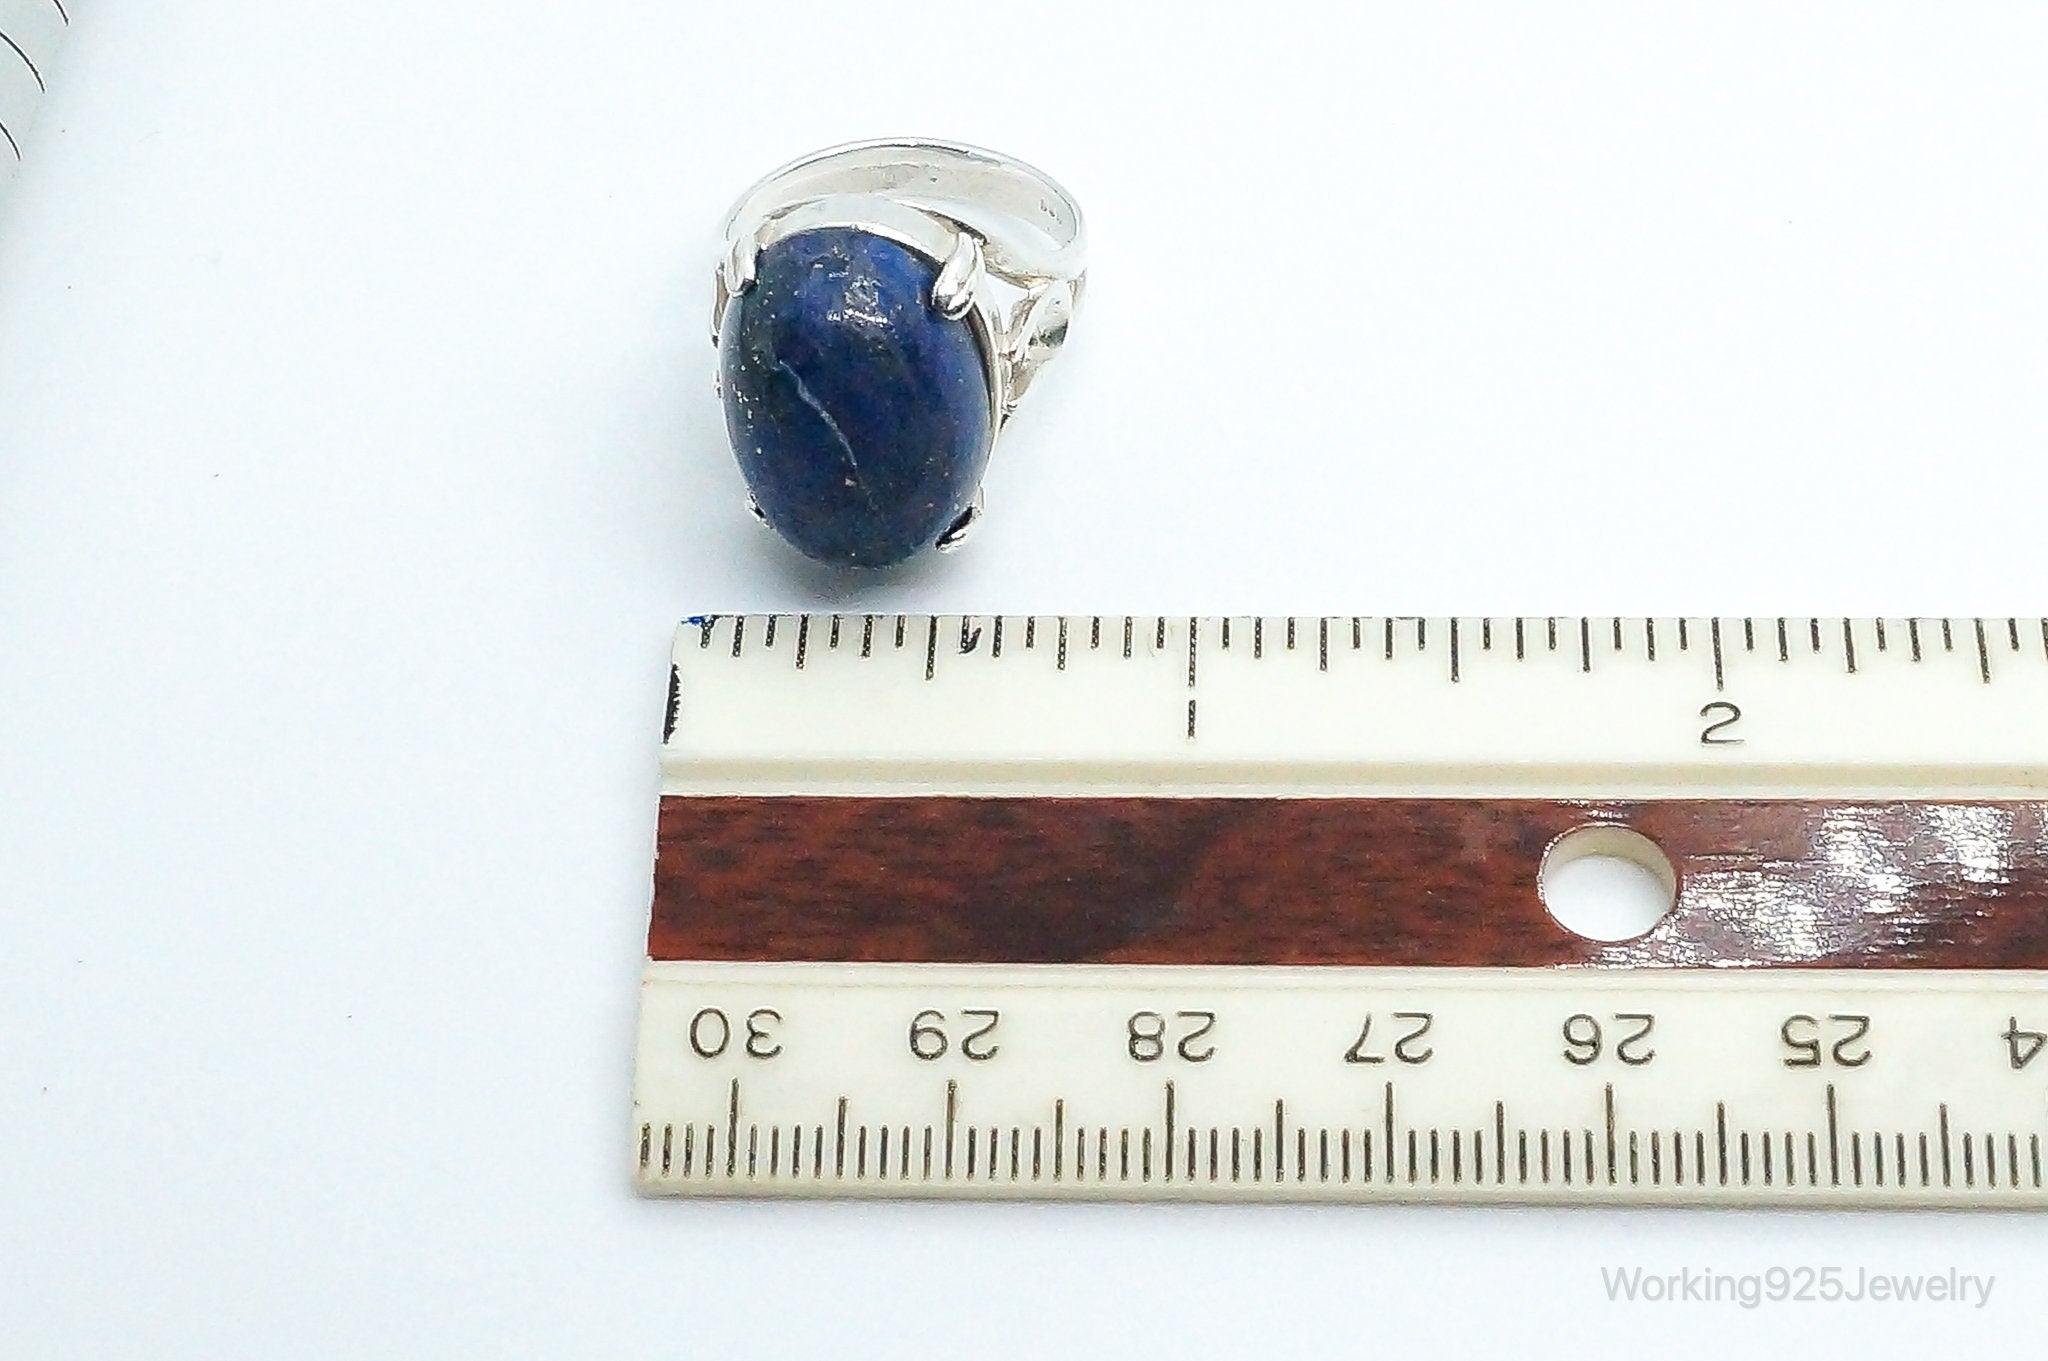 Vintage Lapis Lazuli Sterling Silver Ring - Size 7.25